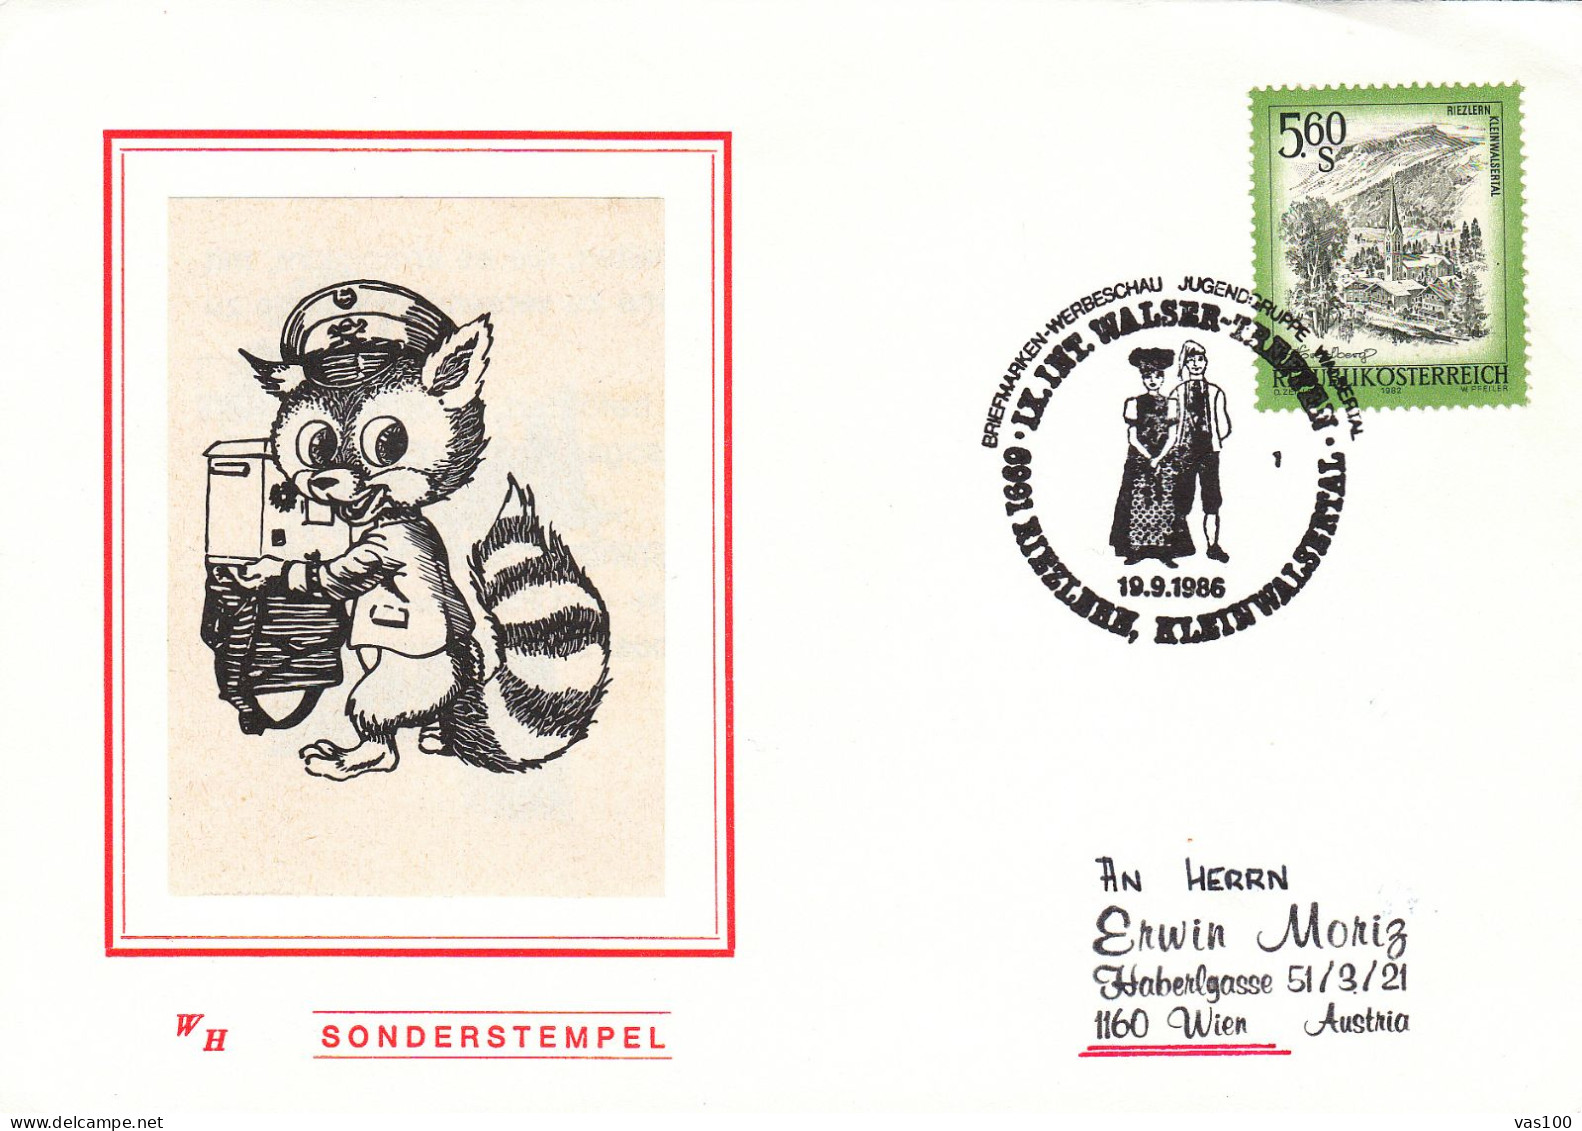 AUSTRIA POSTAL HISTORY / KLEINWALSERTAL, HABERLGASSE, 19.09.1986 - Briefe U. Dokumente